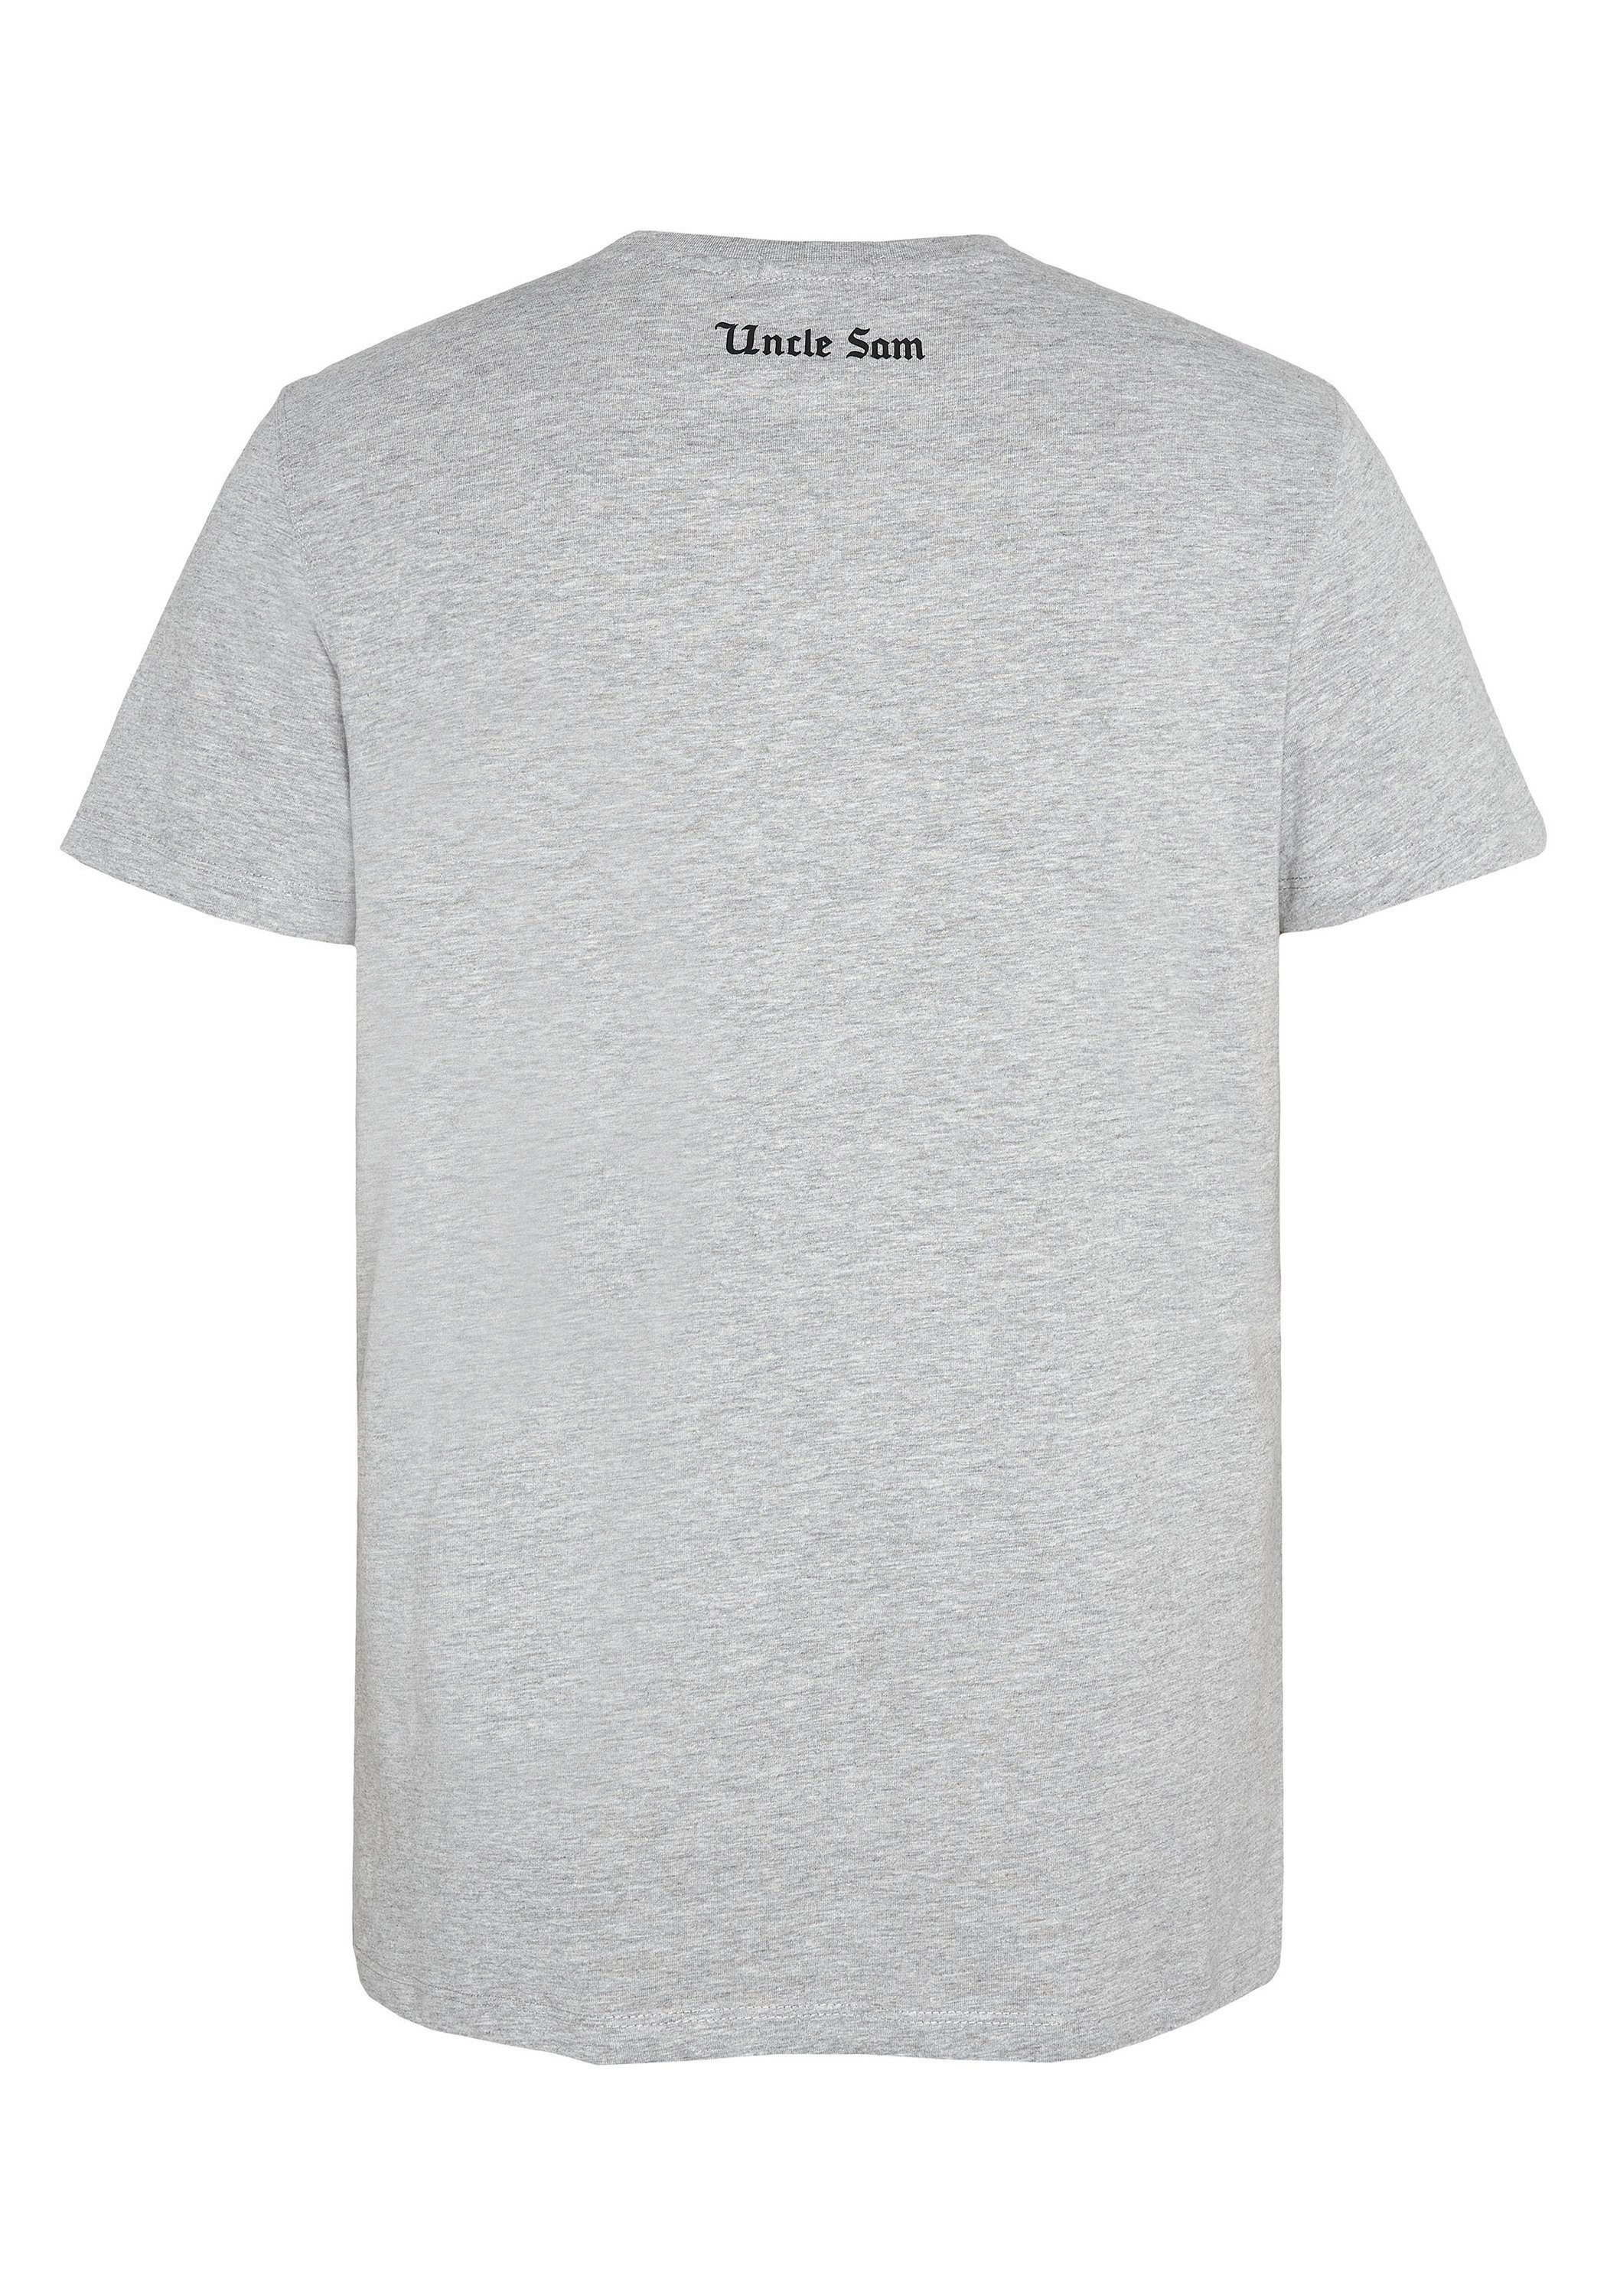 aus Neutral Melange Baumwolle Sam 17-4402M Gray Uncle Print-Shirt